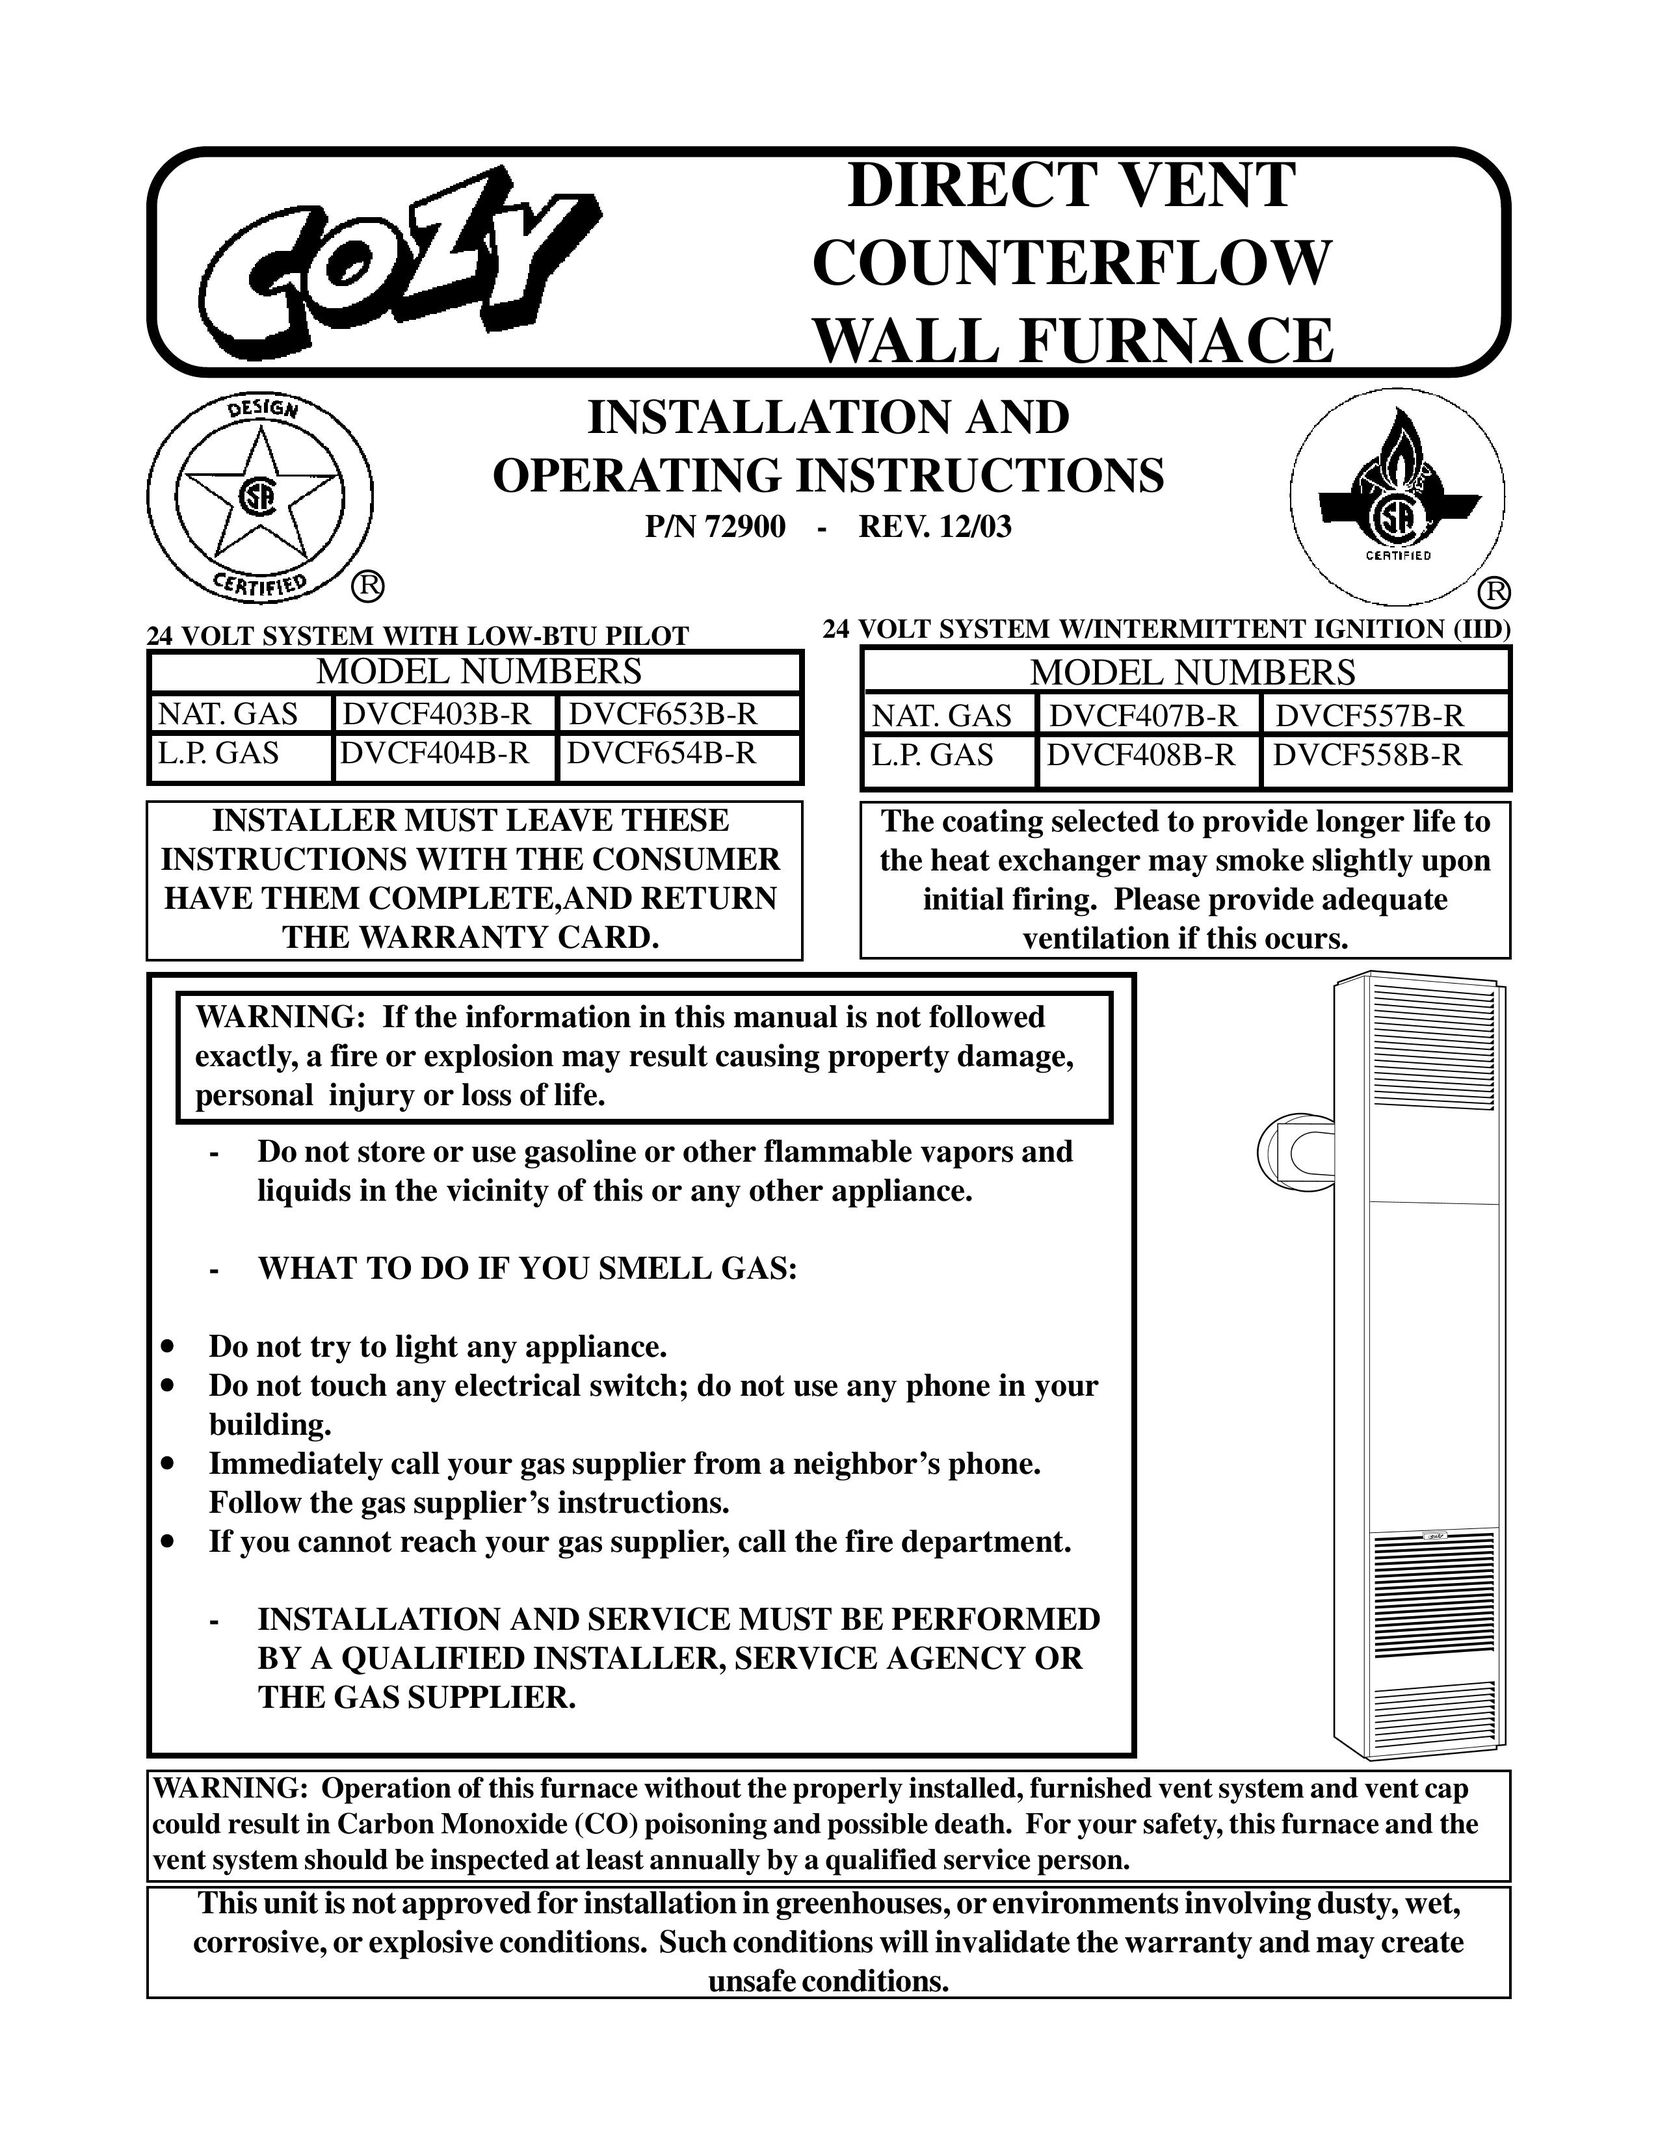 Louisville Tin and Stove DVCF407B-R Furnace User Manual